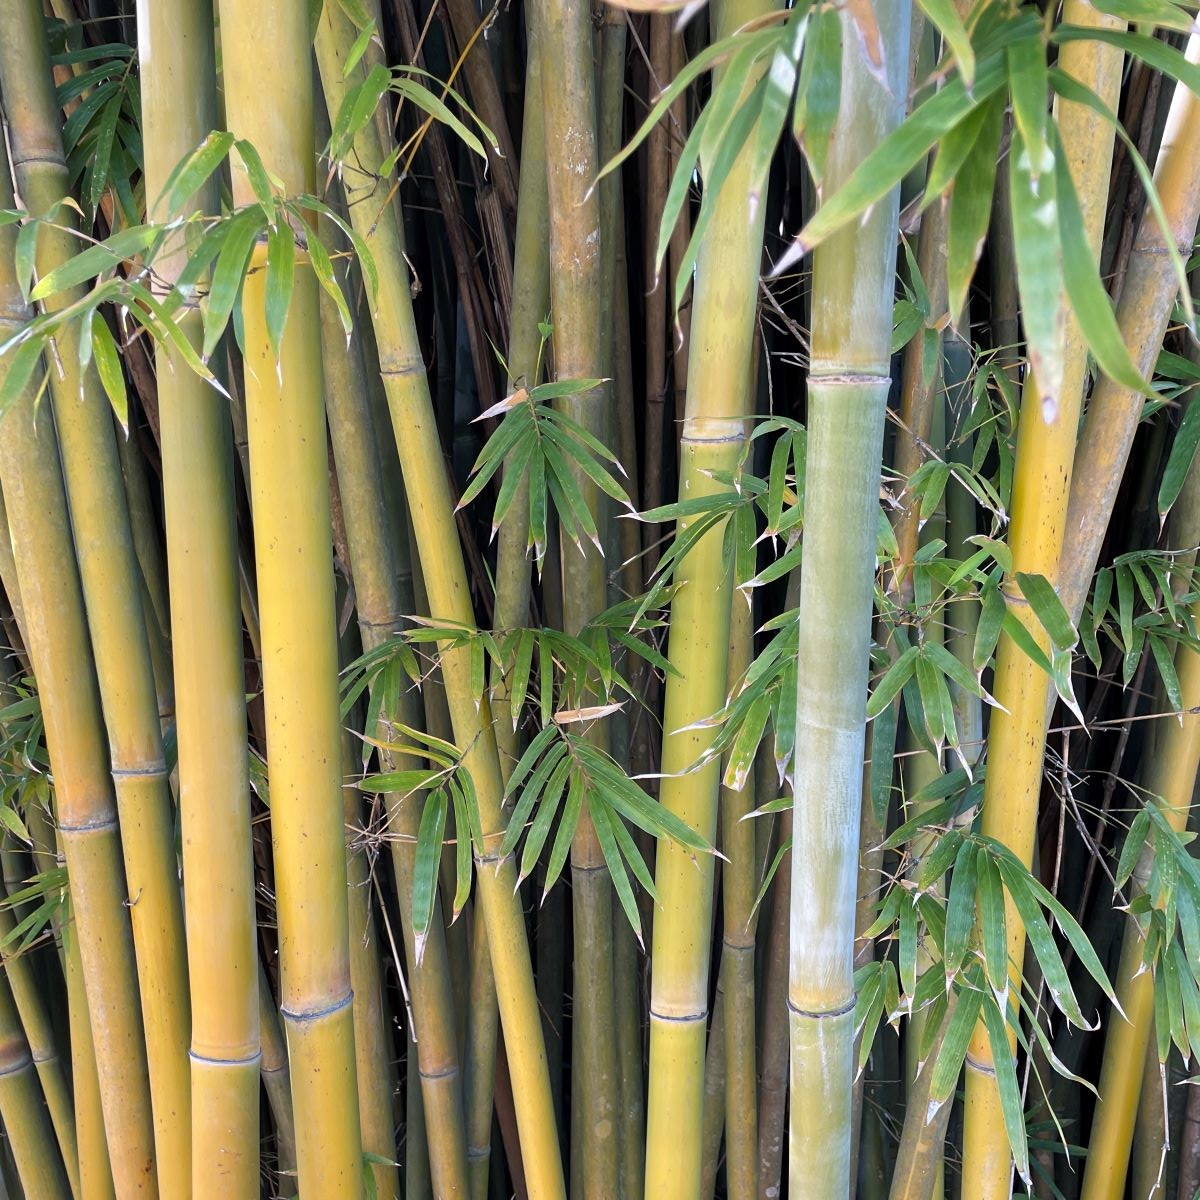 Bamboo Backyard Skills Workshop